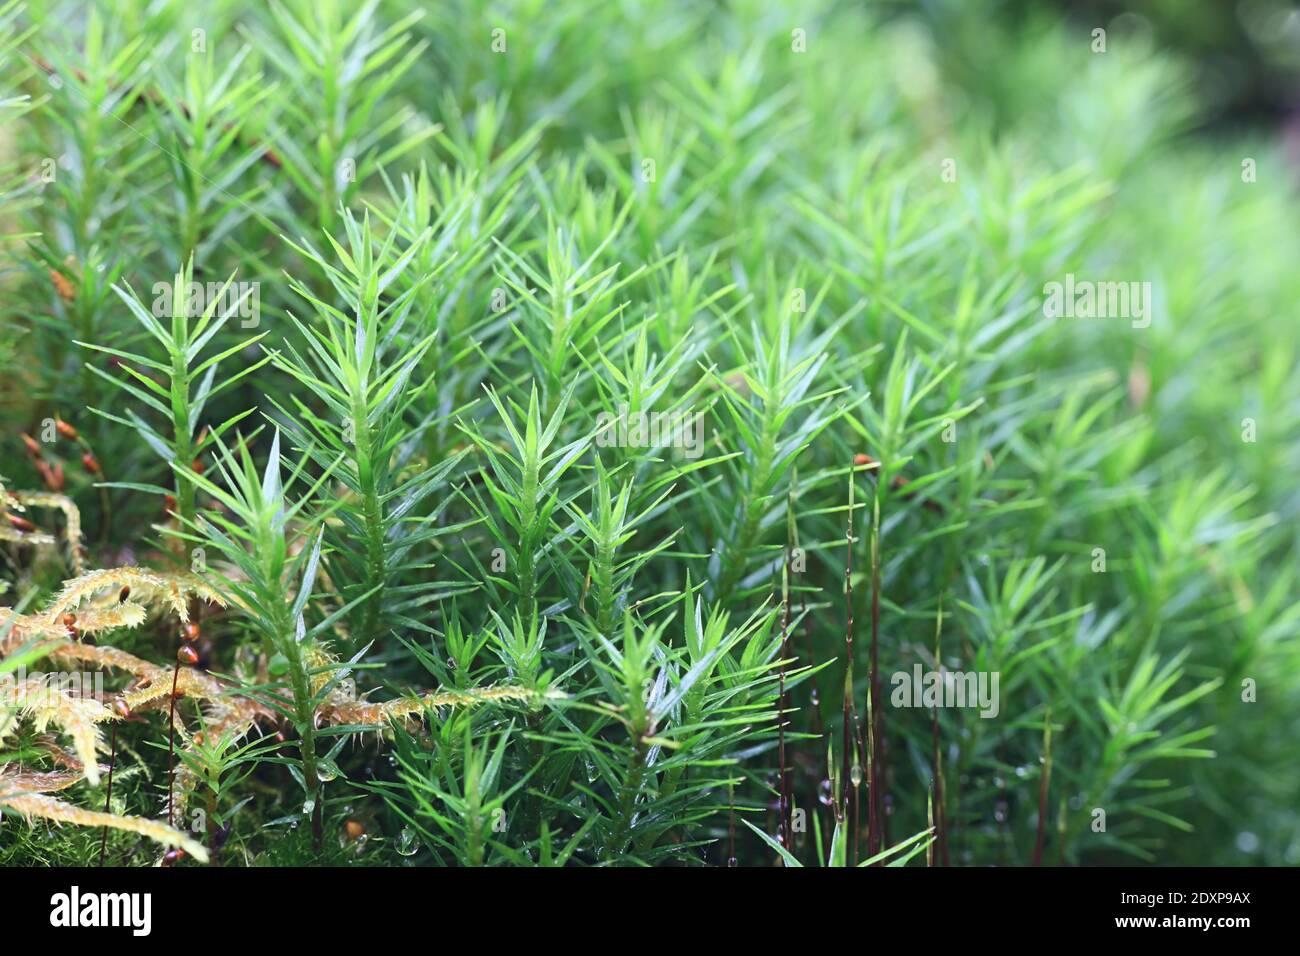 Bank Haircap Moss, Polytrichastrum formosum Stock Photo